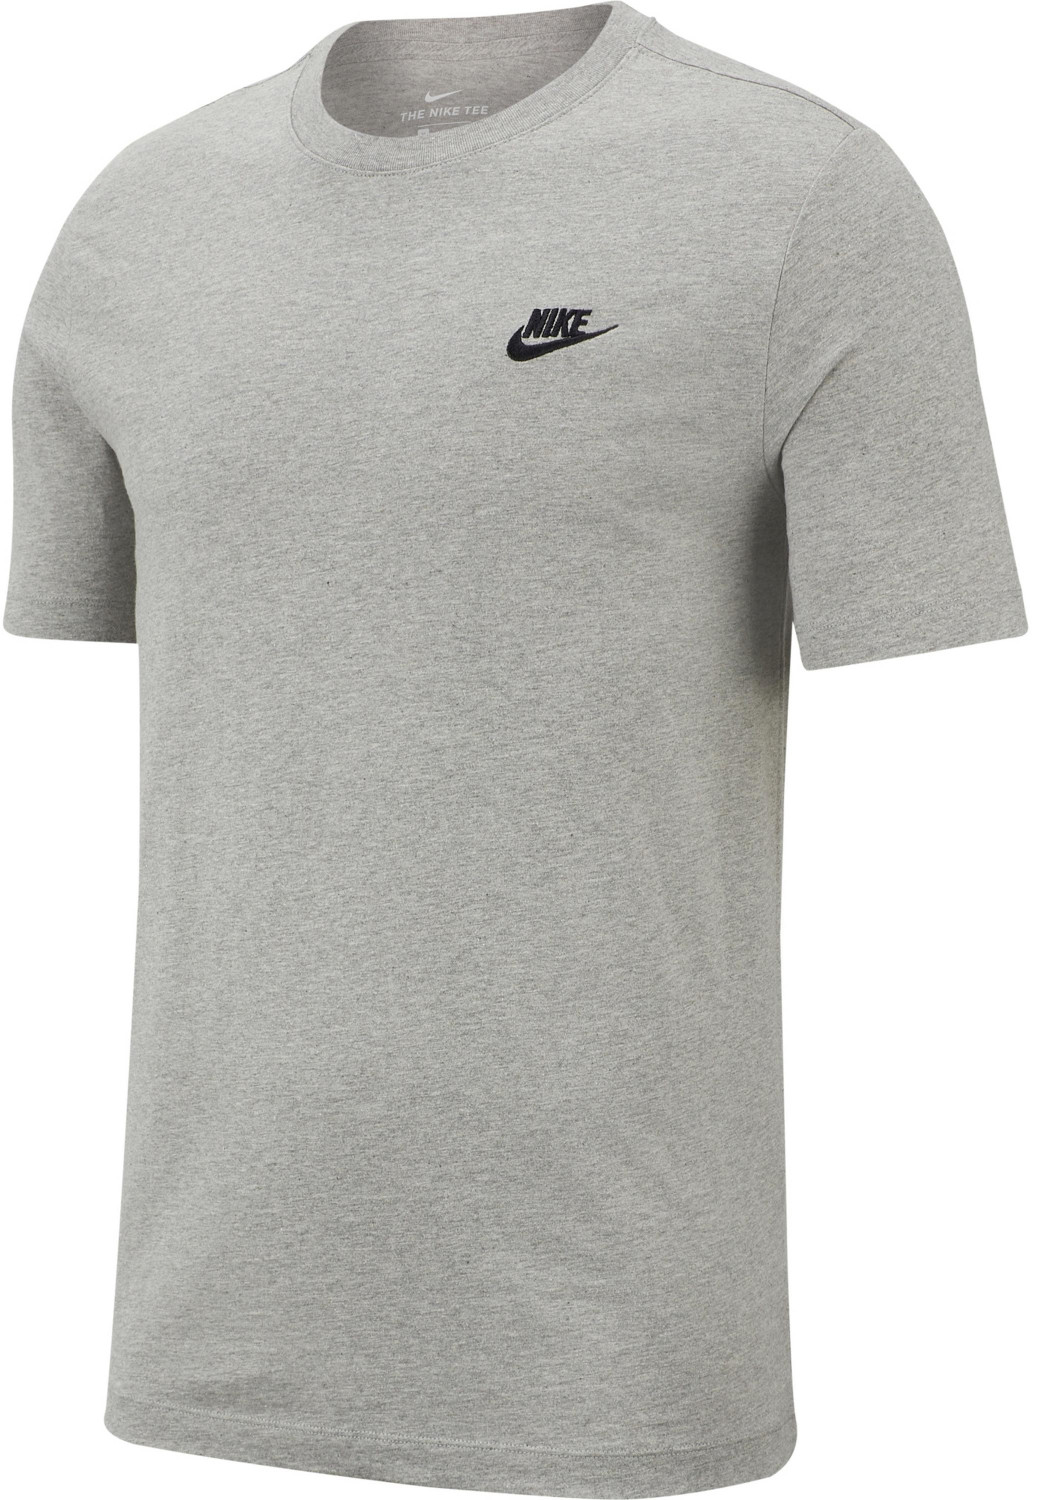 Nike Sportswear Club dark grey heather/black